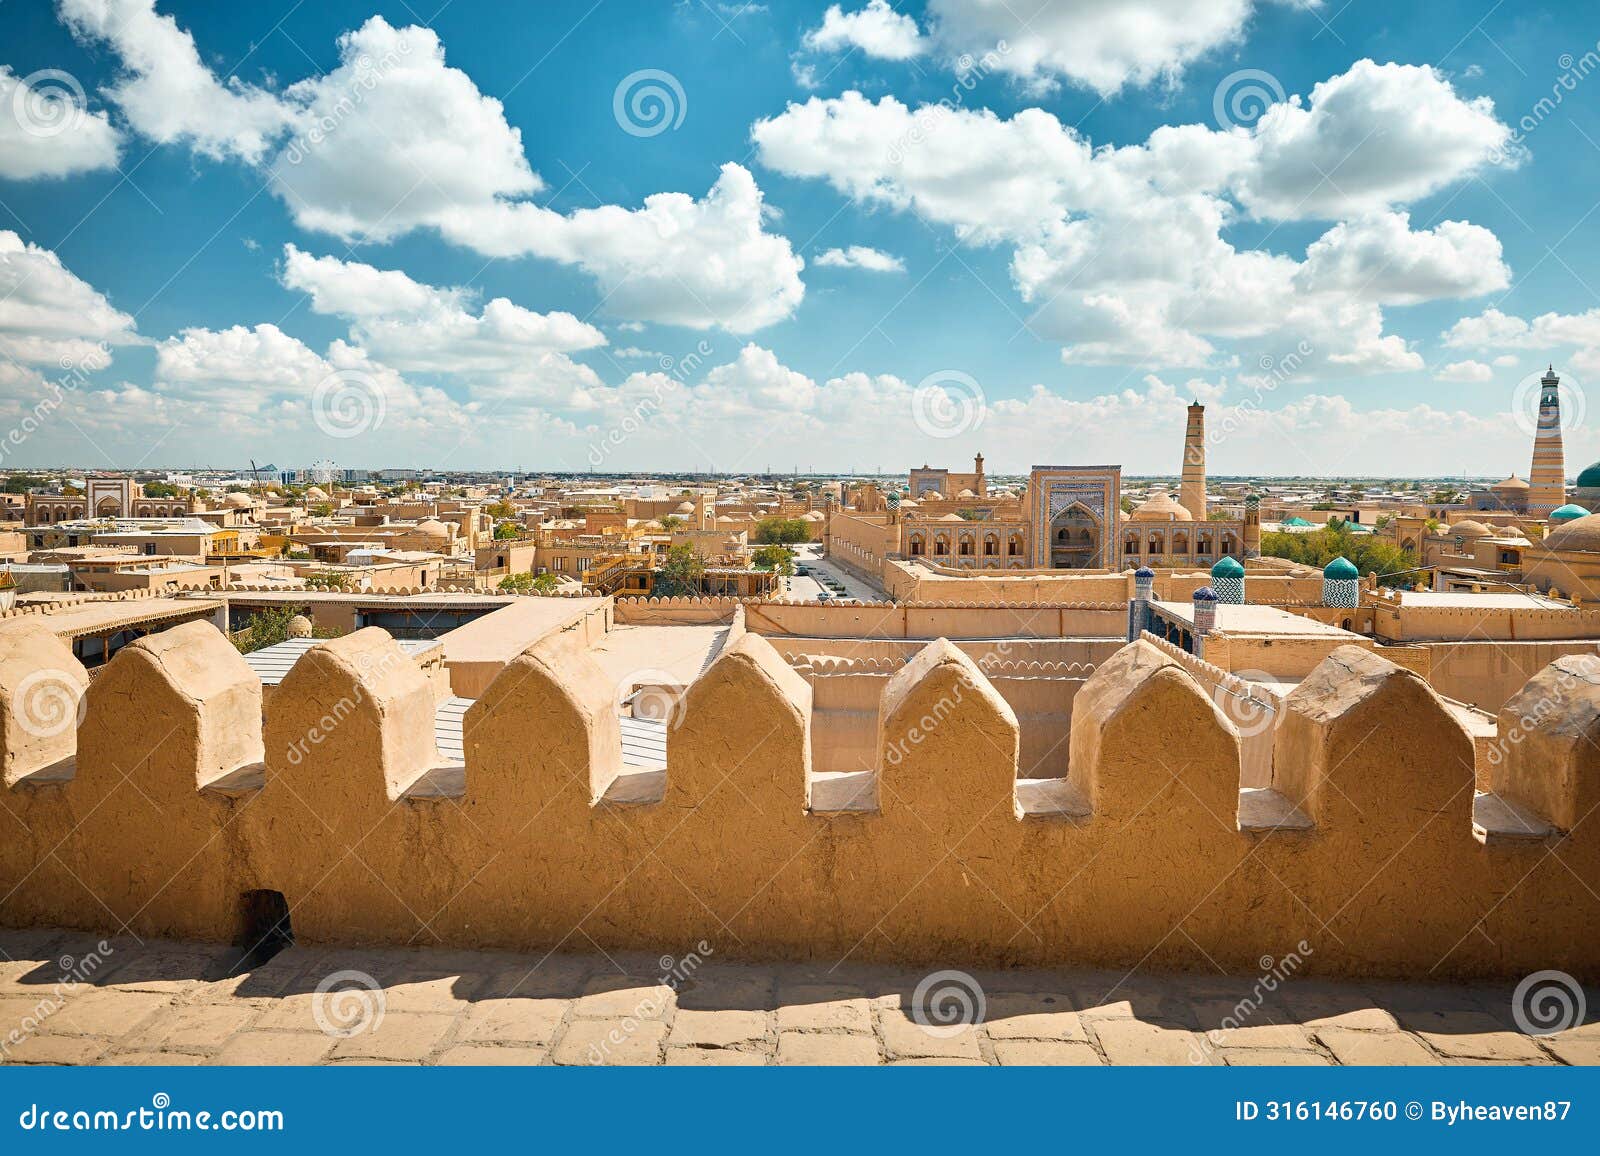 madrasah and kalta minor minaret in ancient city at khiva in uzbekistan